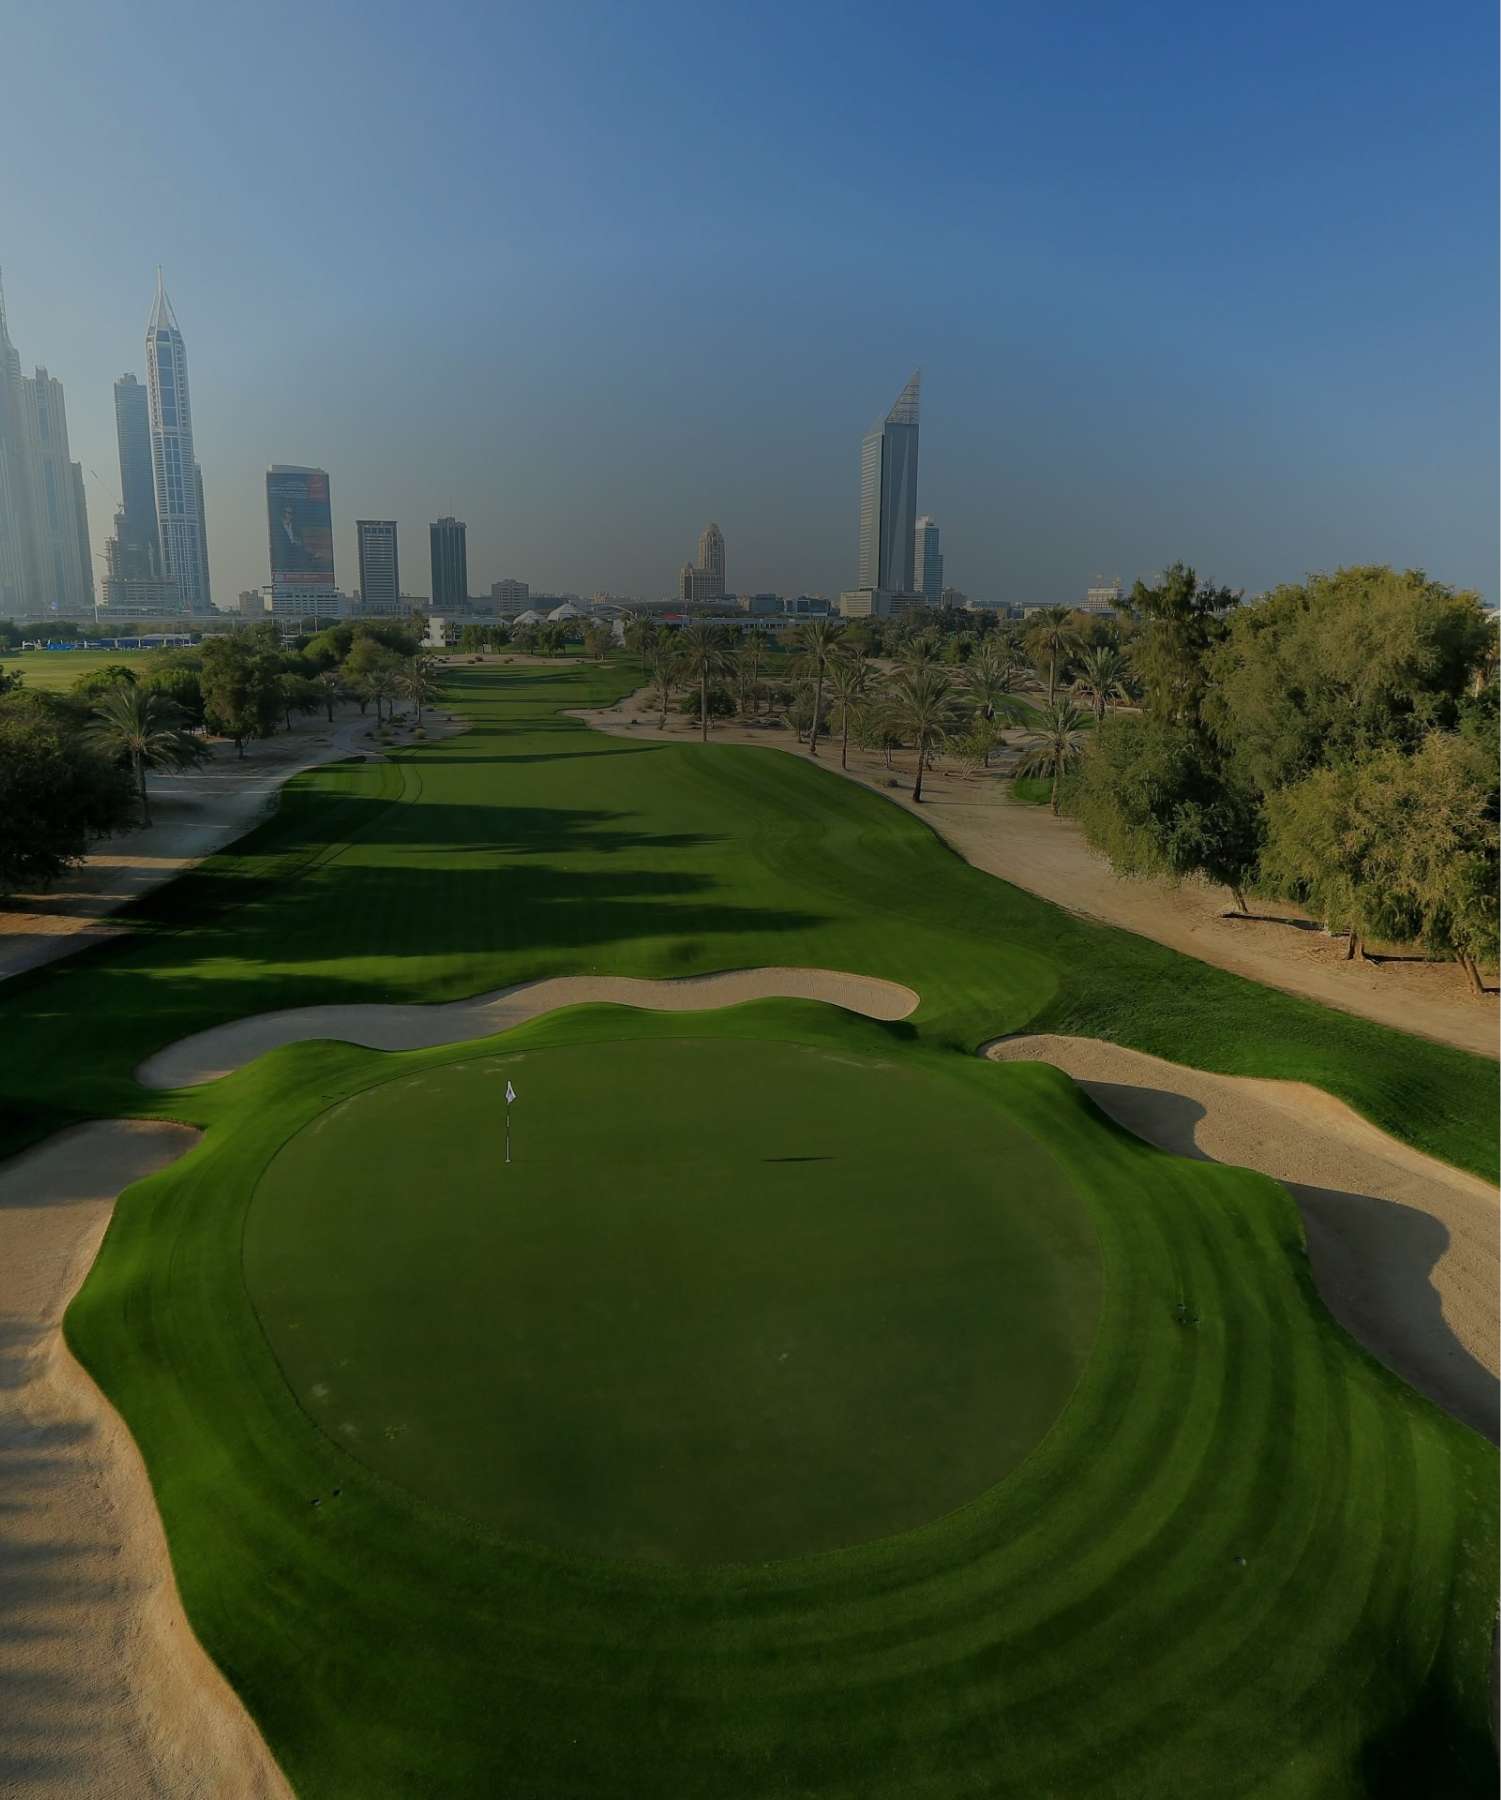 Emirates Golf Club (Majlis Course)